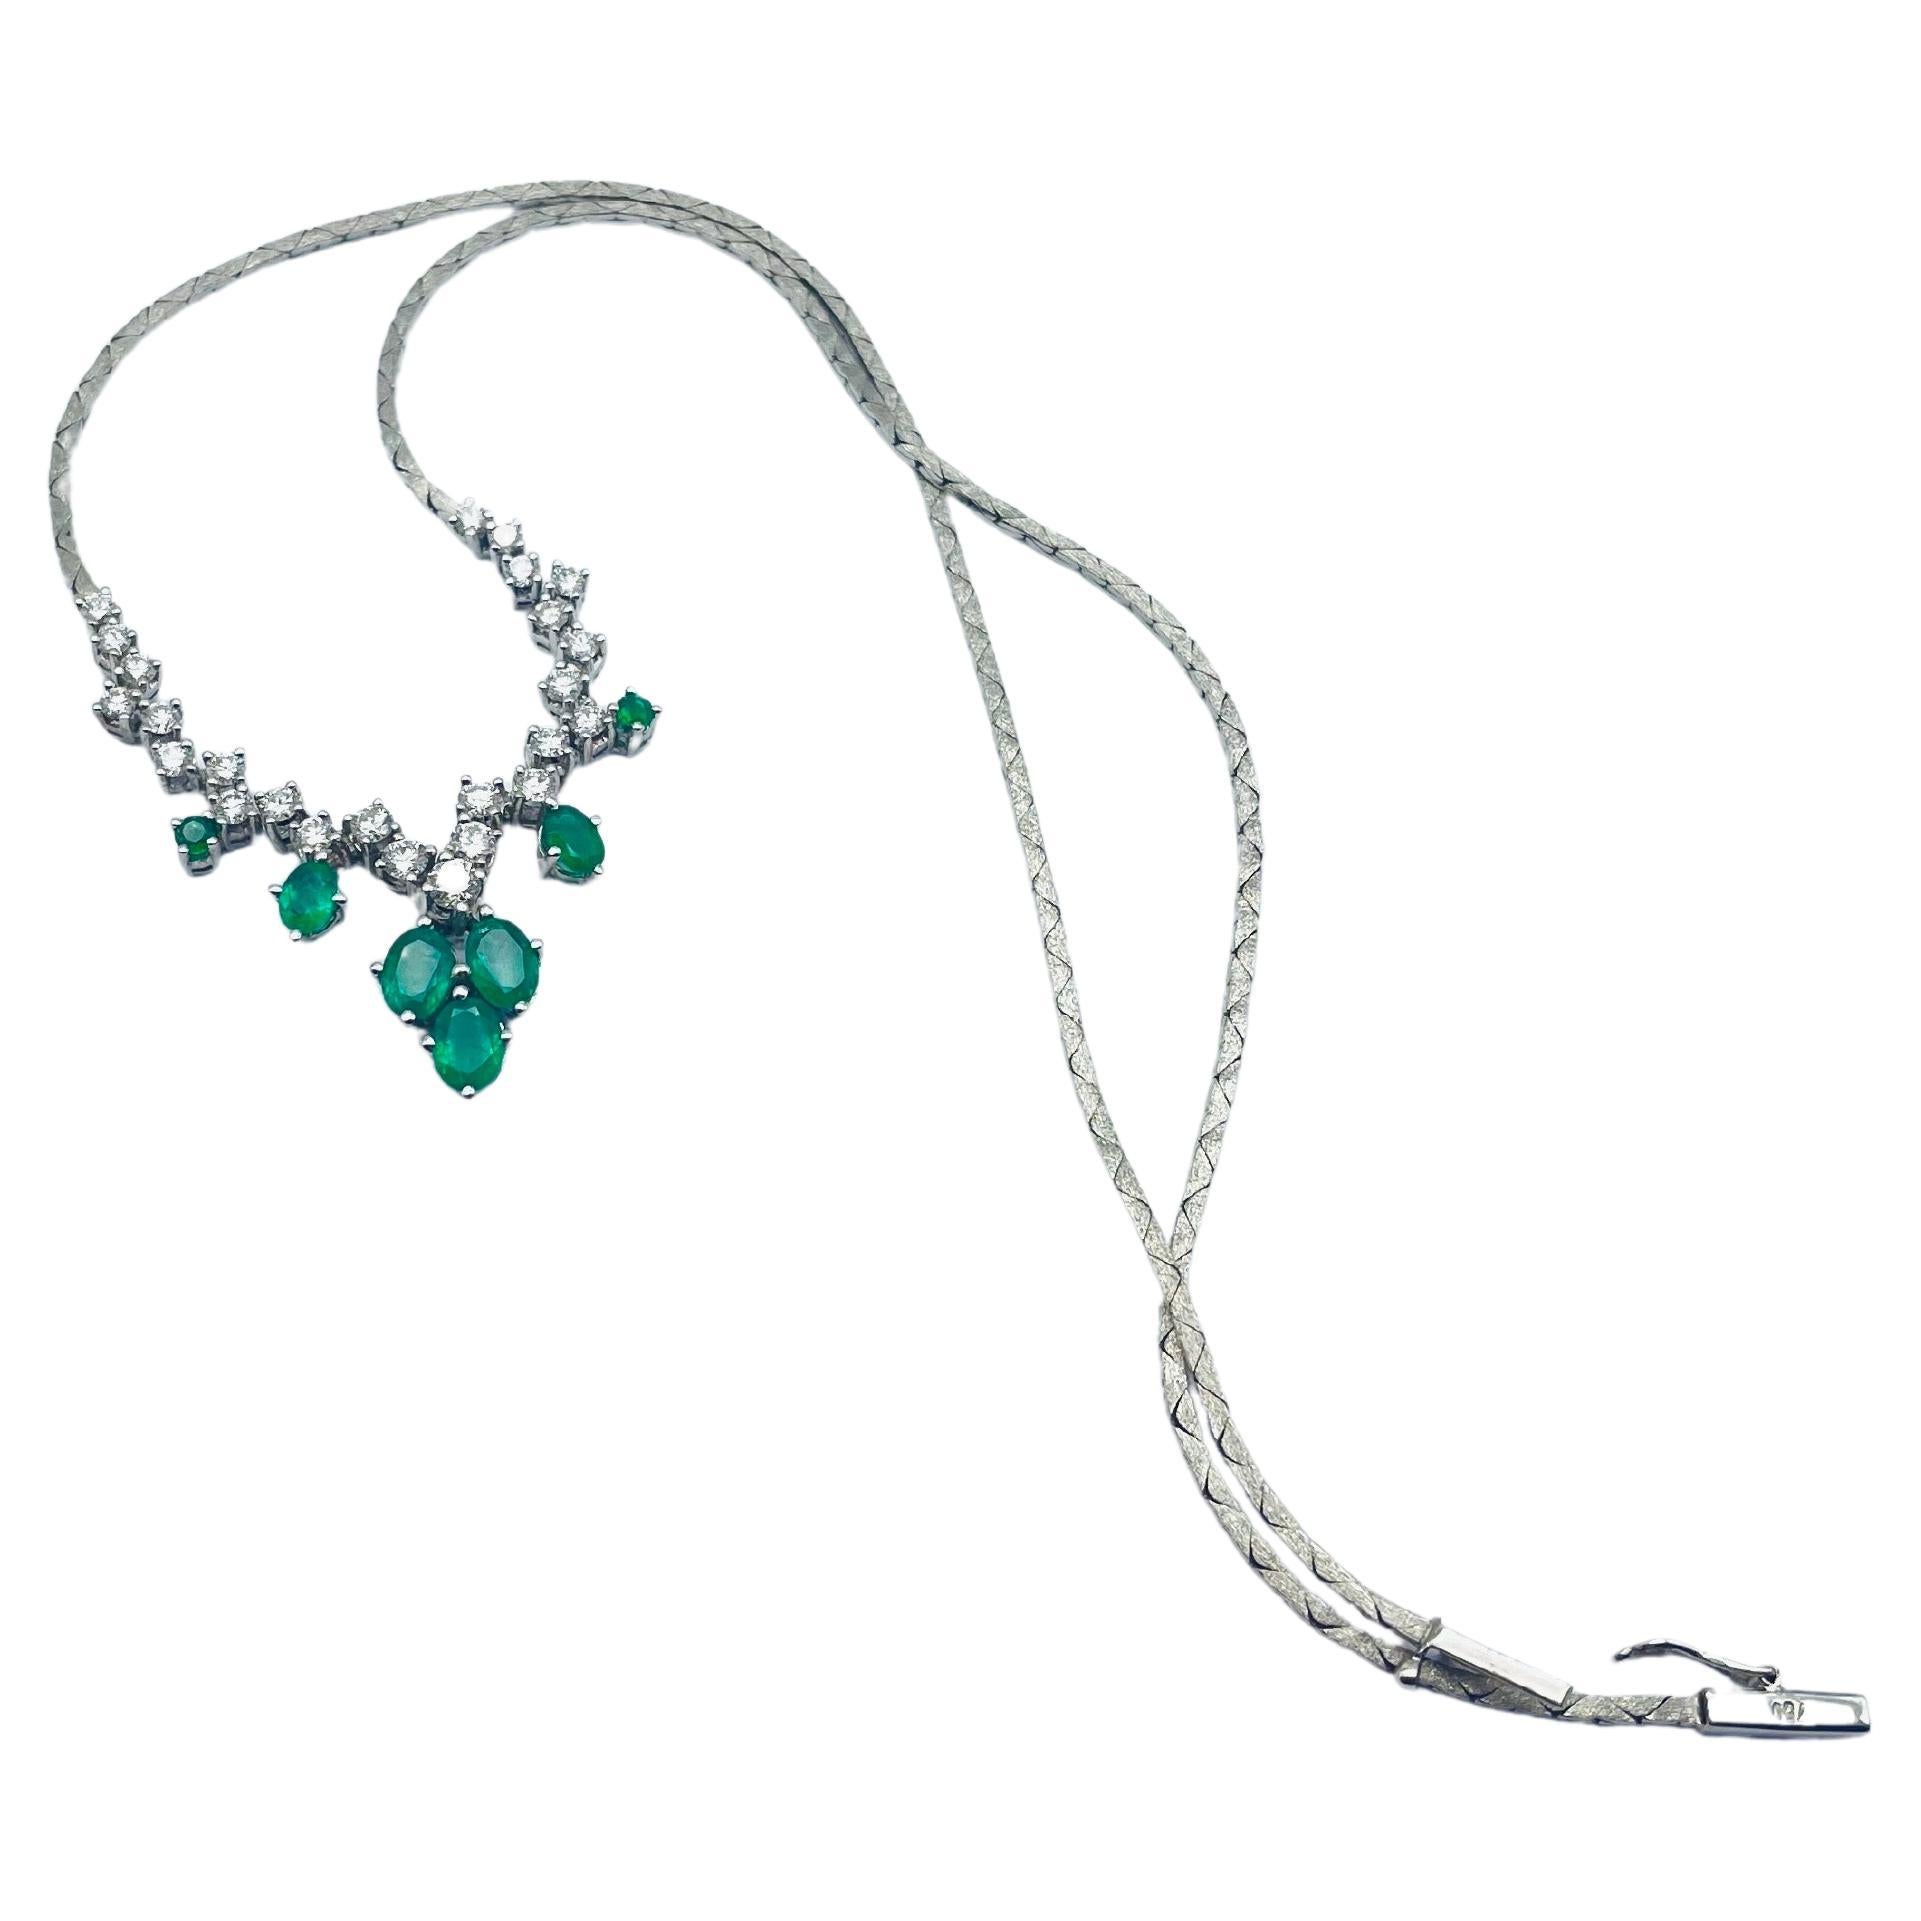 Brilliant Cut Exquisite 18k White Gold Necklace emeralds and diamonds